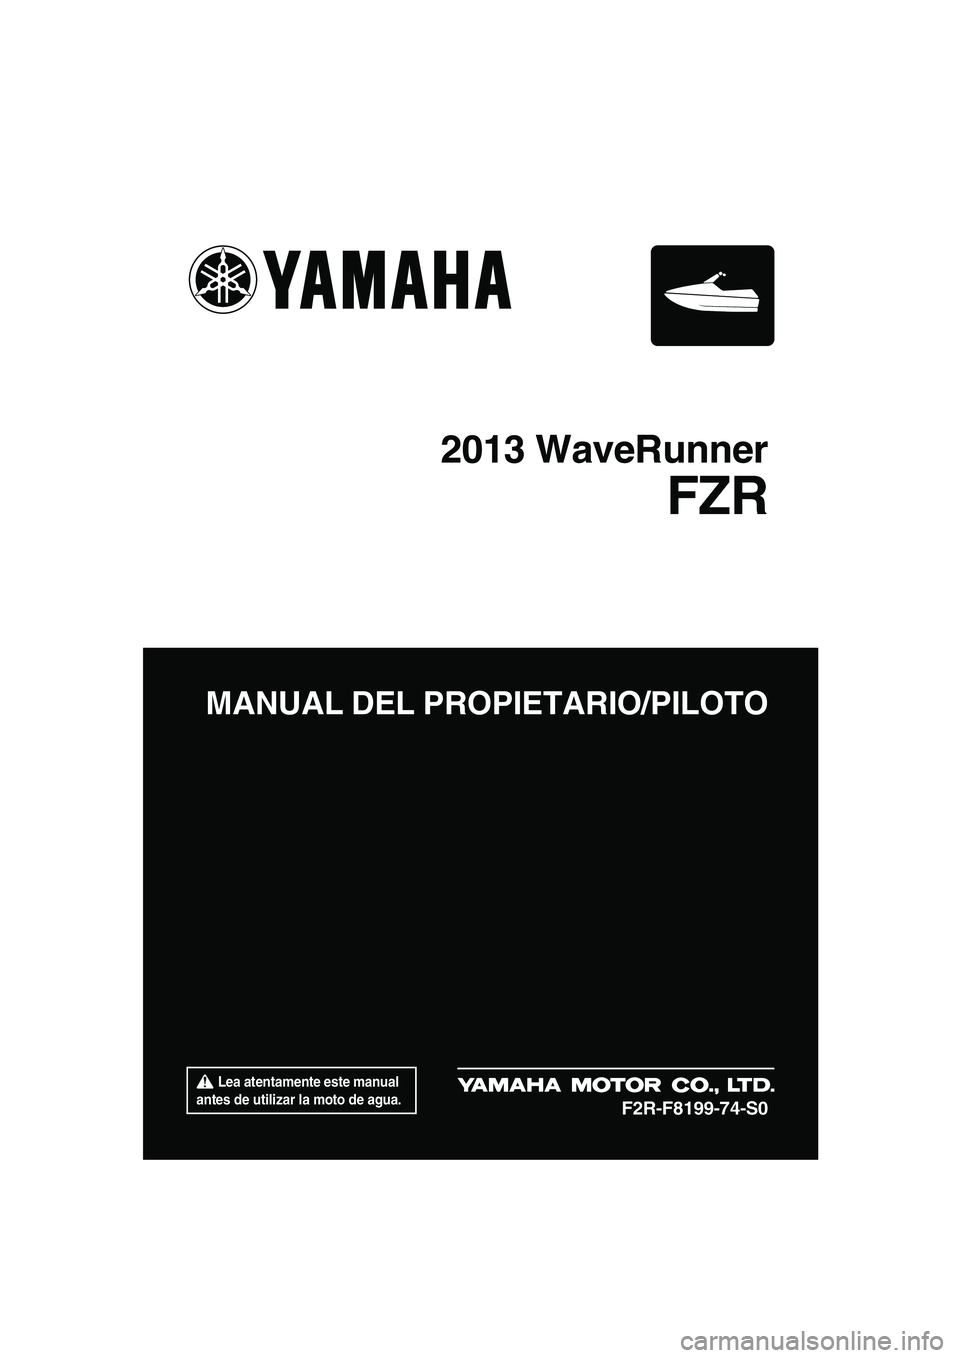 YAMAHA FZR 2013  Manuale de Empleo (in Spanish)  Lea atentamente este manual 
antes de utilizar la moto de agua.
MANUAL DEL PROPIETARIO/PILOTO
2013 WaveRunner
FZR
F2R-F8199-74-S0
UF2R74S0.book  Page 1  Friday, August 10, 2012  1:32 PM 